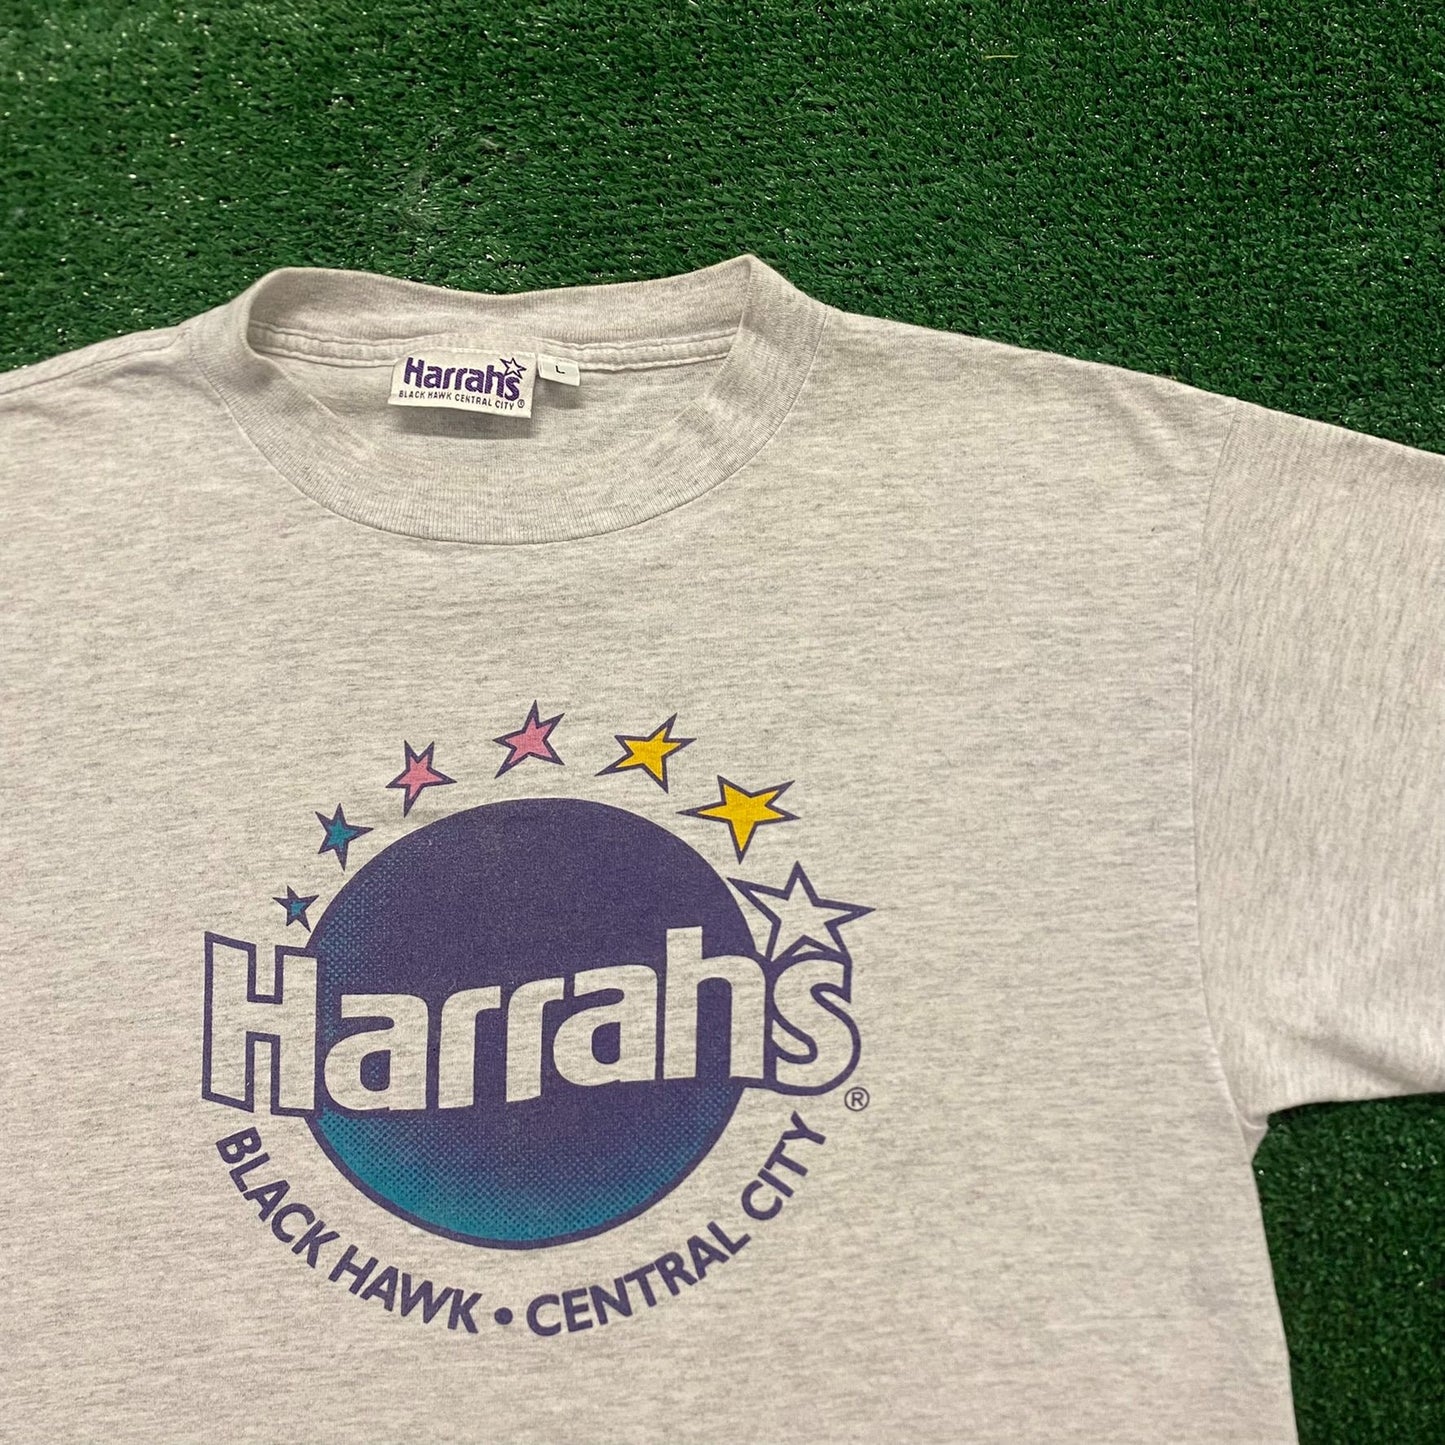 Harrah's Black Hawk Vintage 90s Hotel T-Shirt